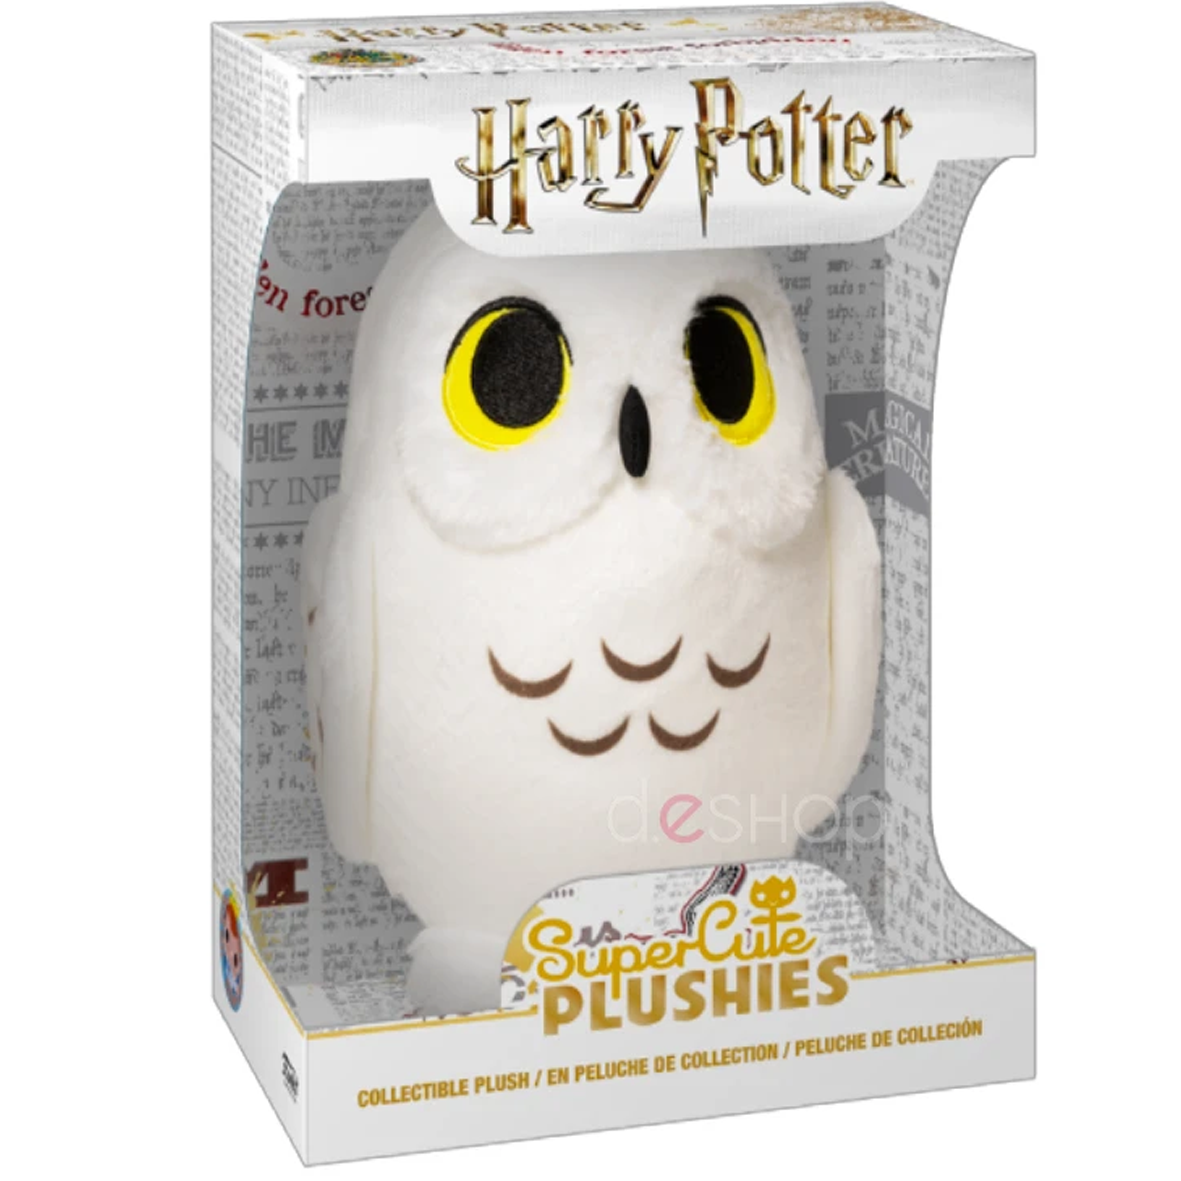 HARRY POTTER - Supercute Peluche - Harry Potter - 20cm : :  Peluche Funko Harry Potter